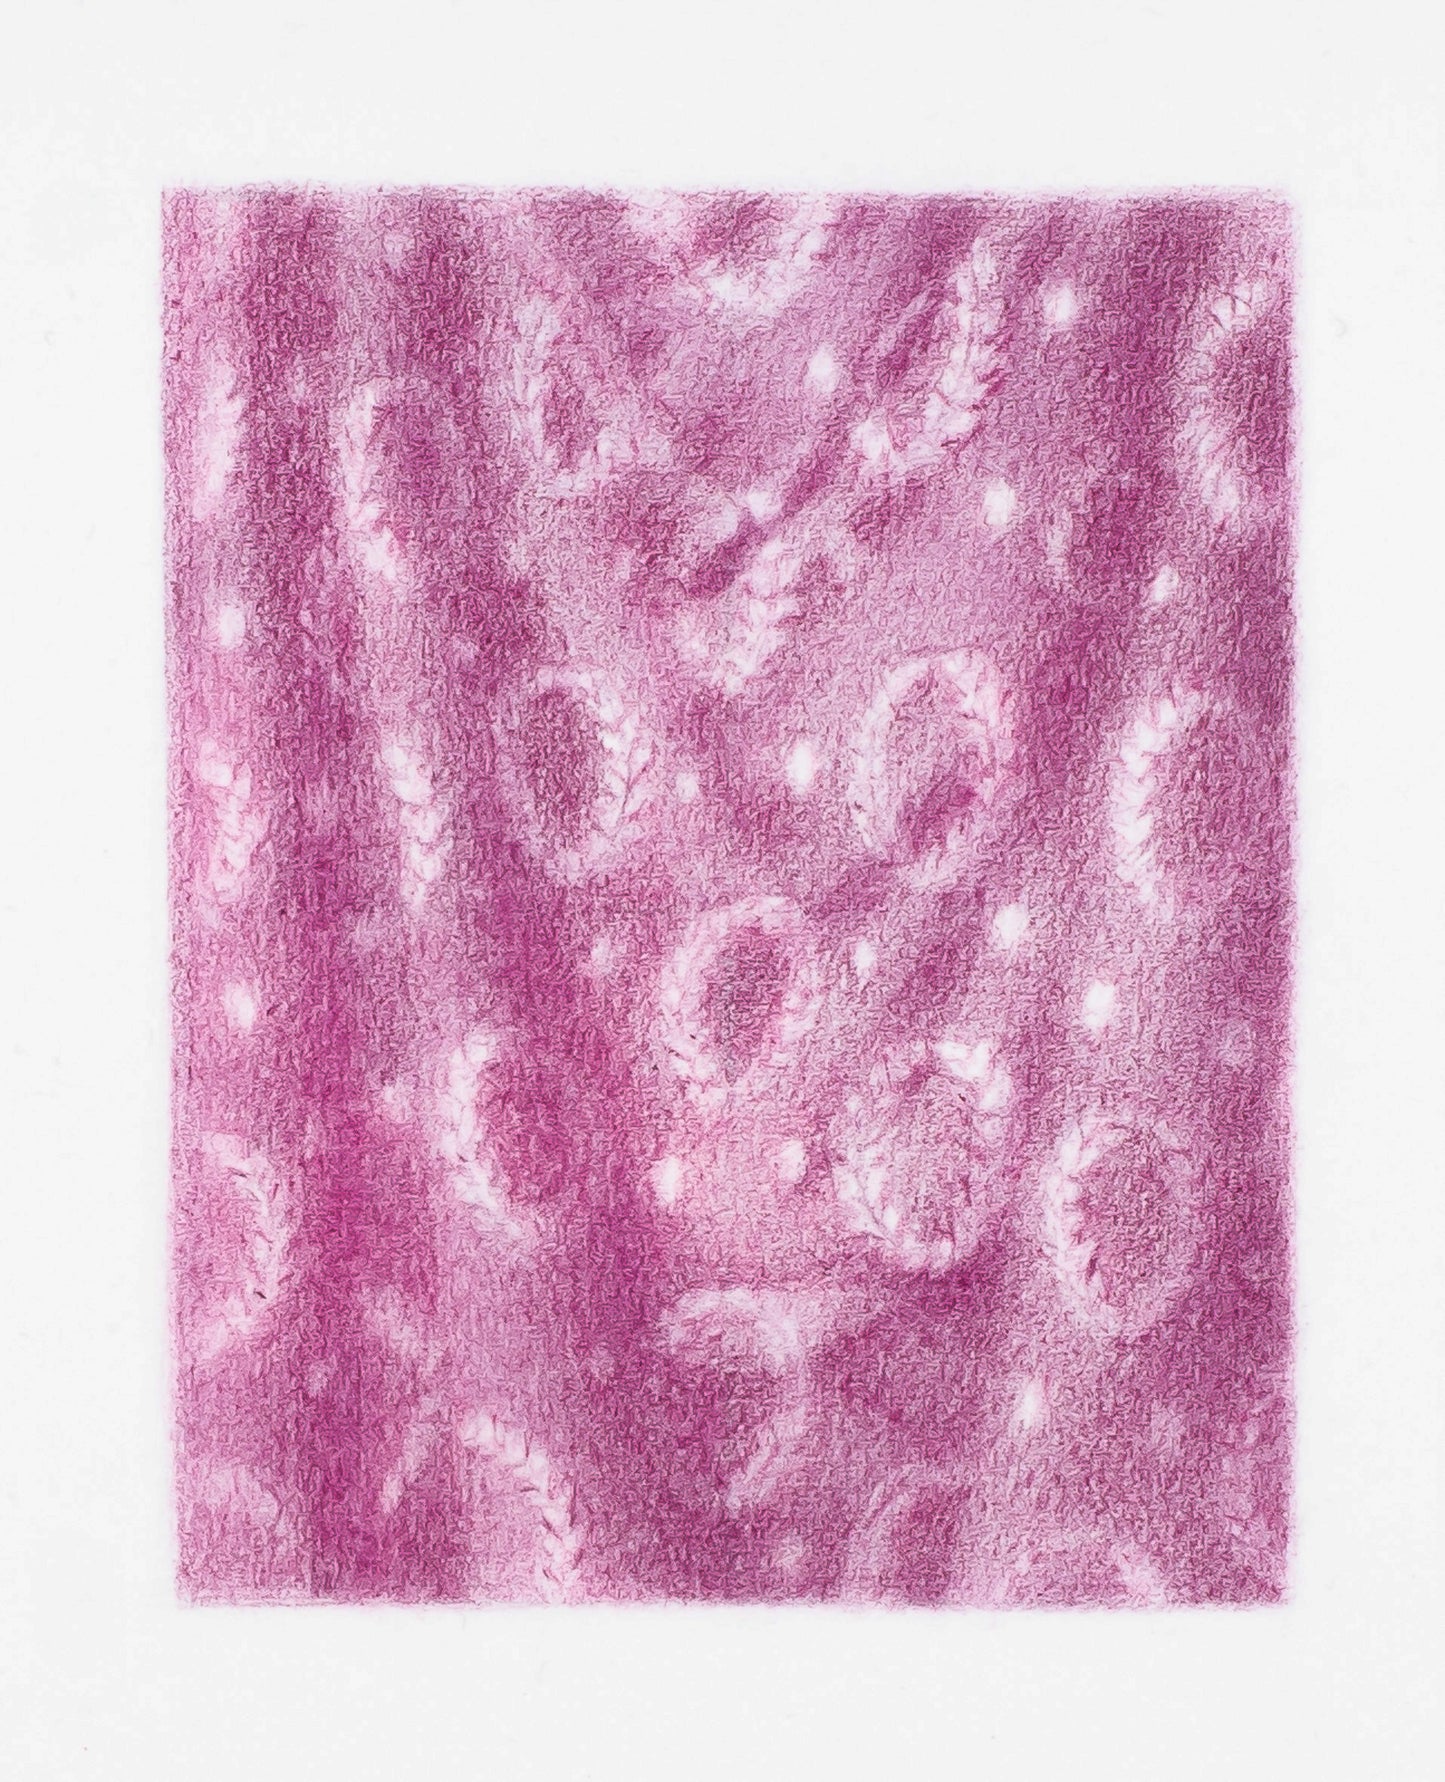 Wreath textile detail - Matisse studio (Nice), 2020